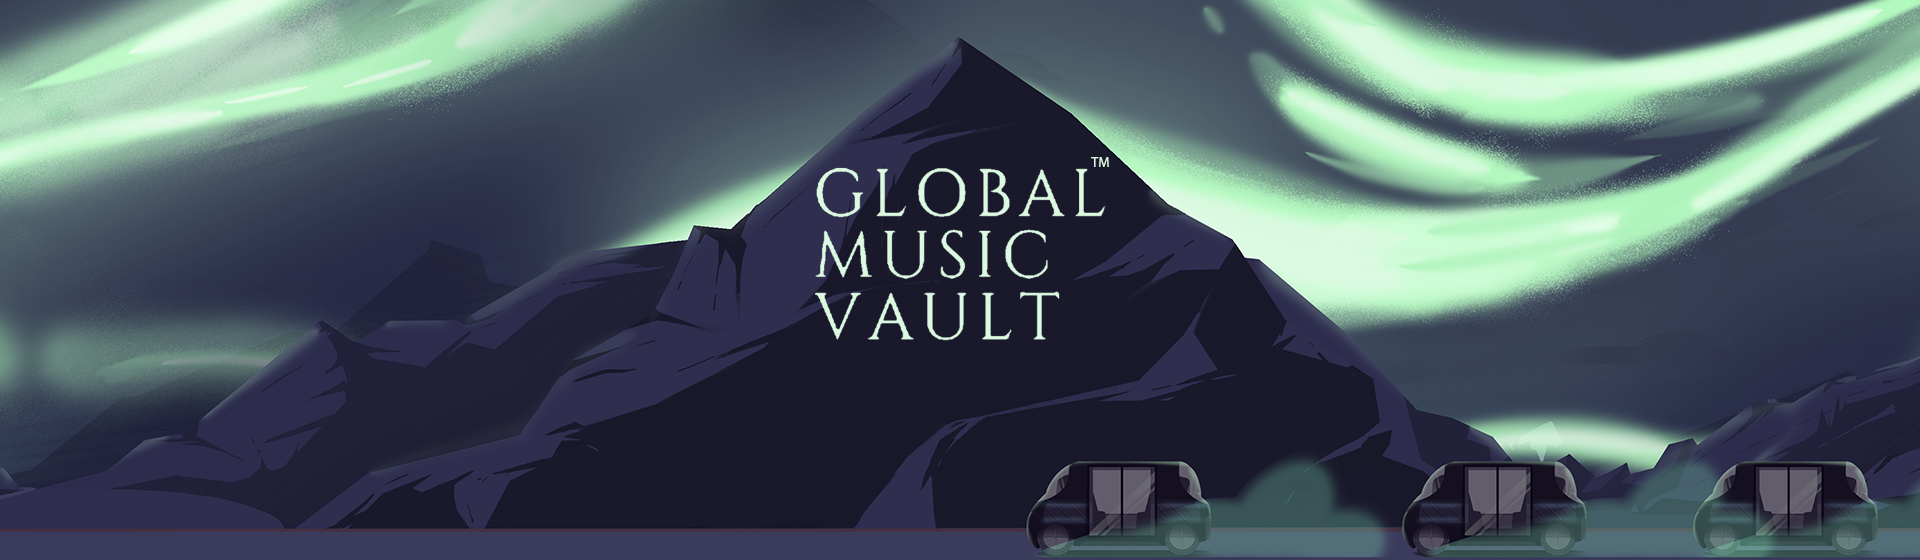 Global Music Vault